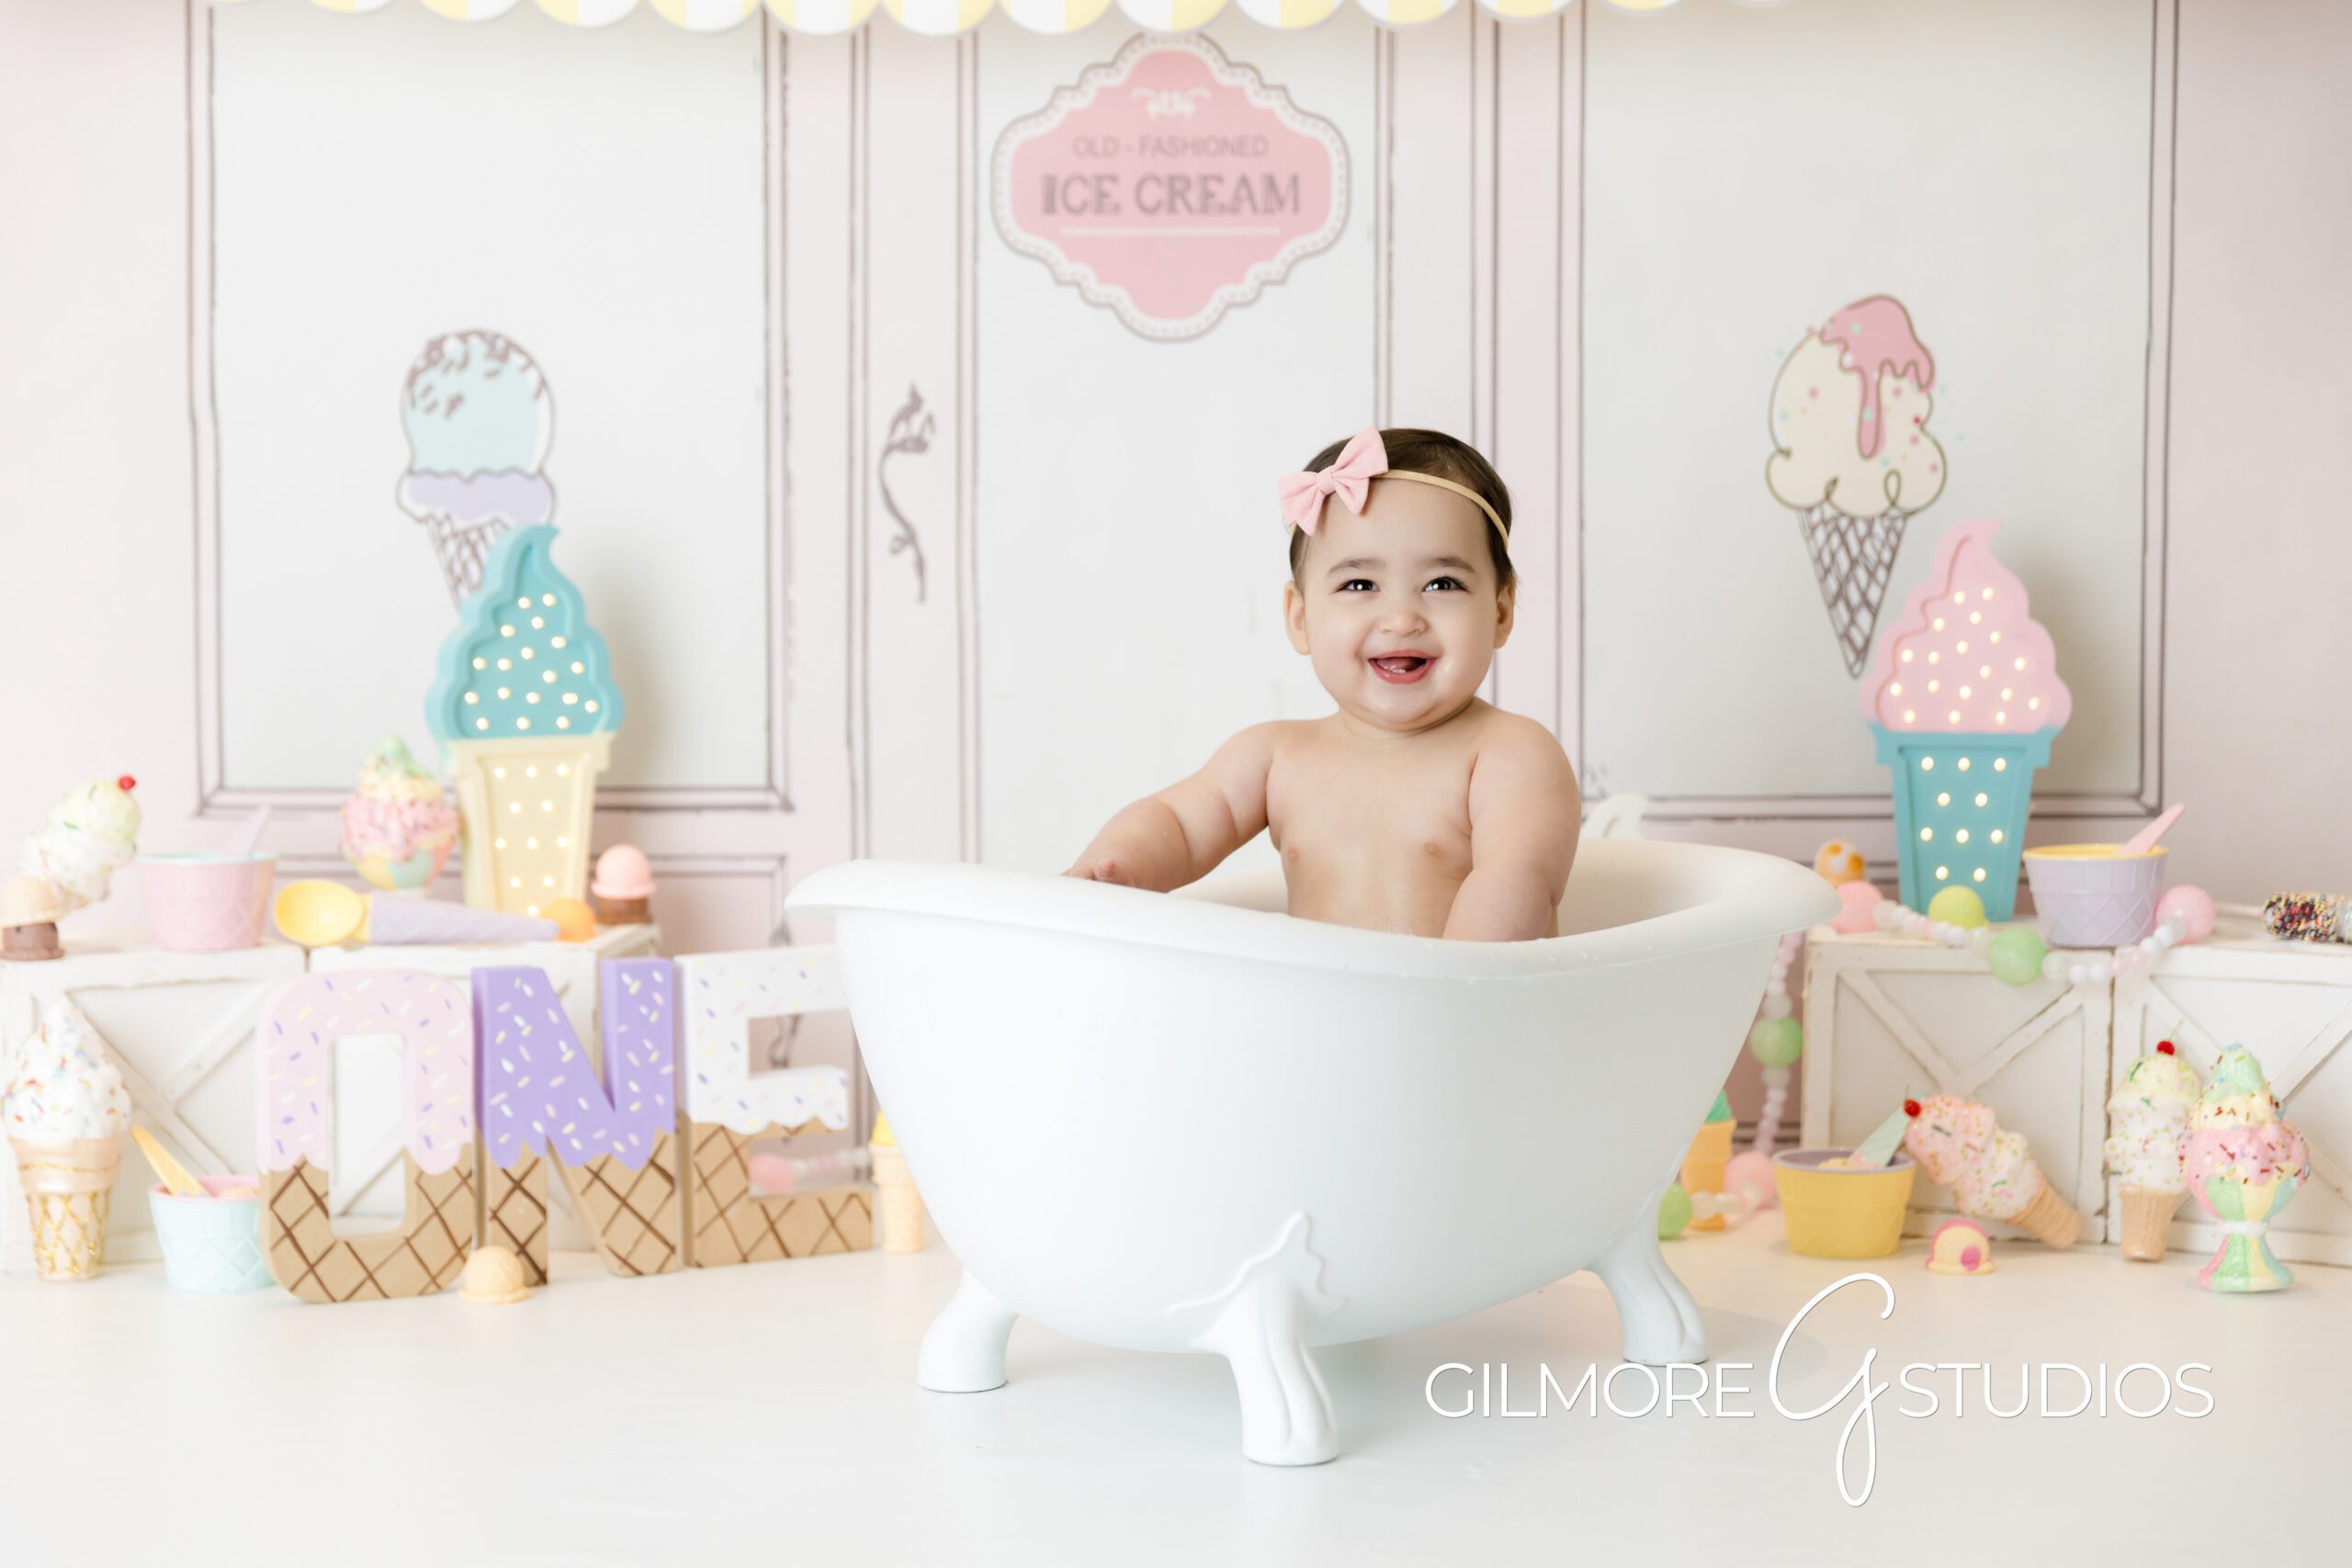 ice cream theme cake Smash, little girl, bathtub, ice cream parlor, pink bow, little girl smiling, photography, Gilmore Studios